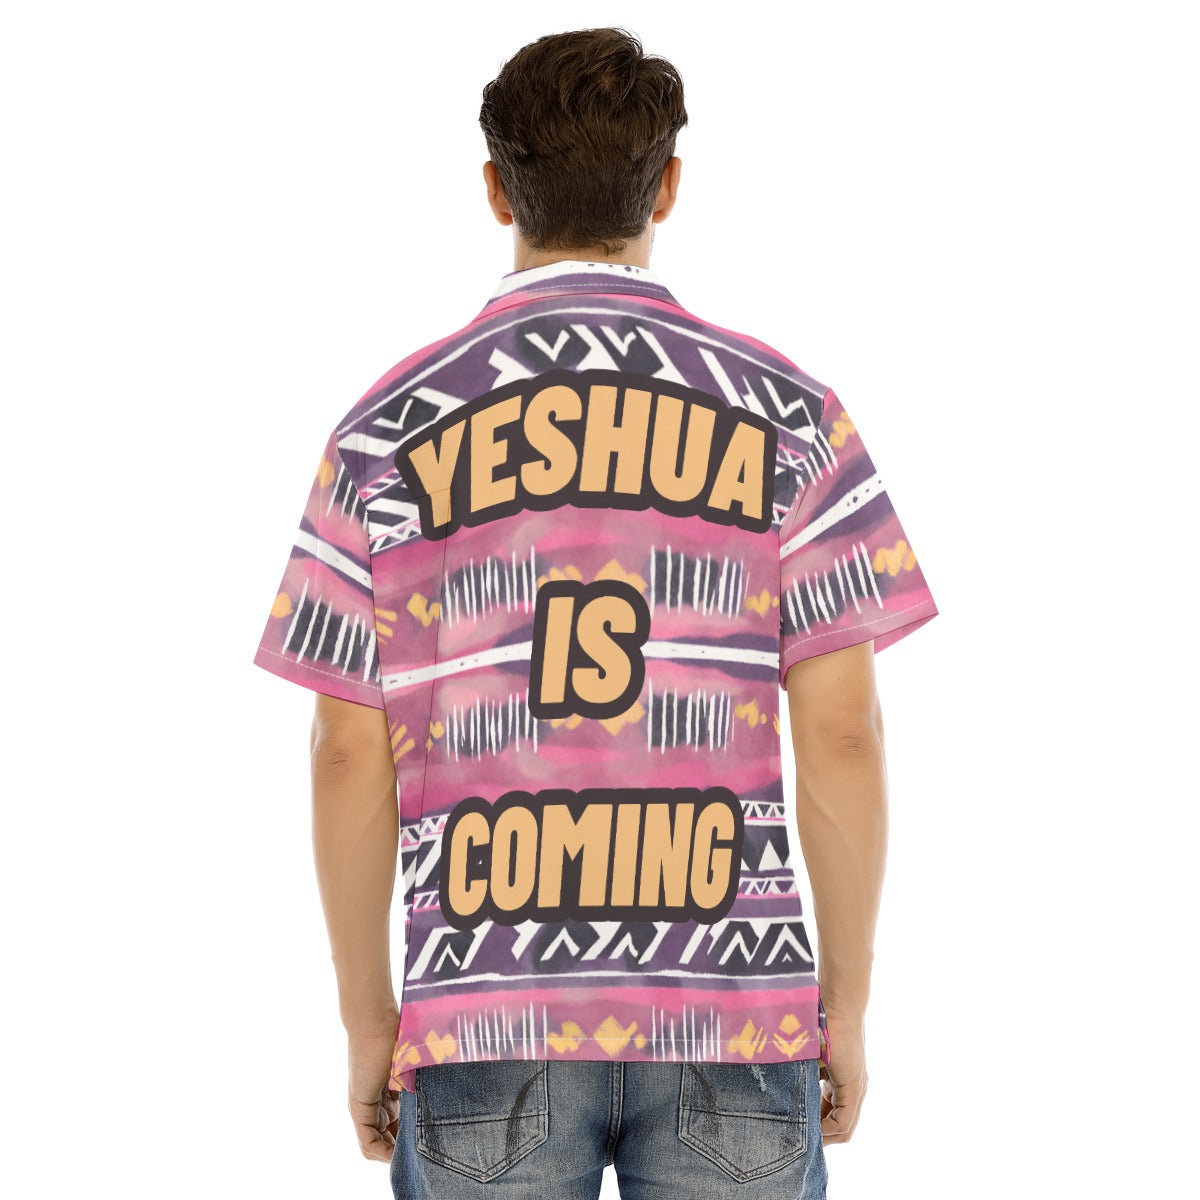 Yeshua is Coming Short Sleeves Shirt